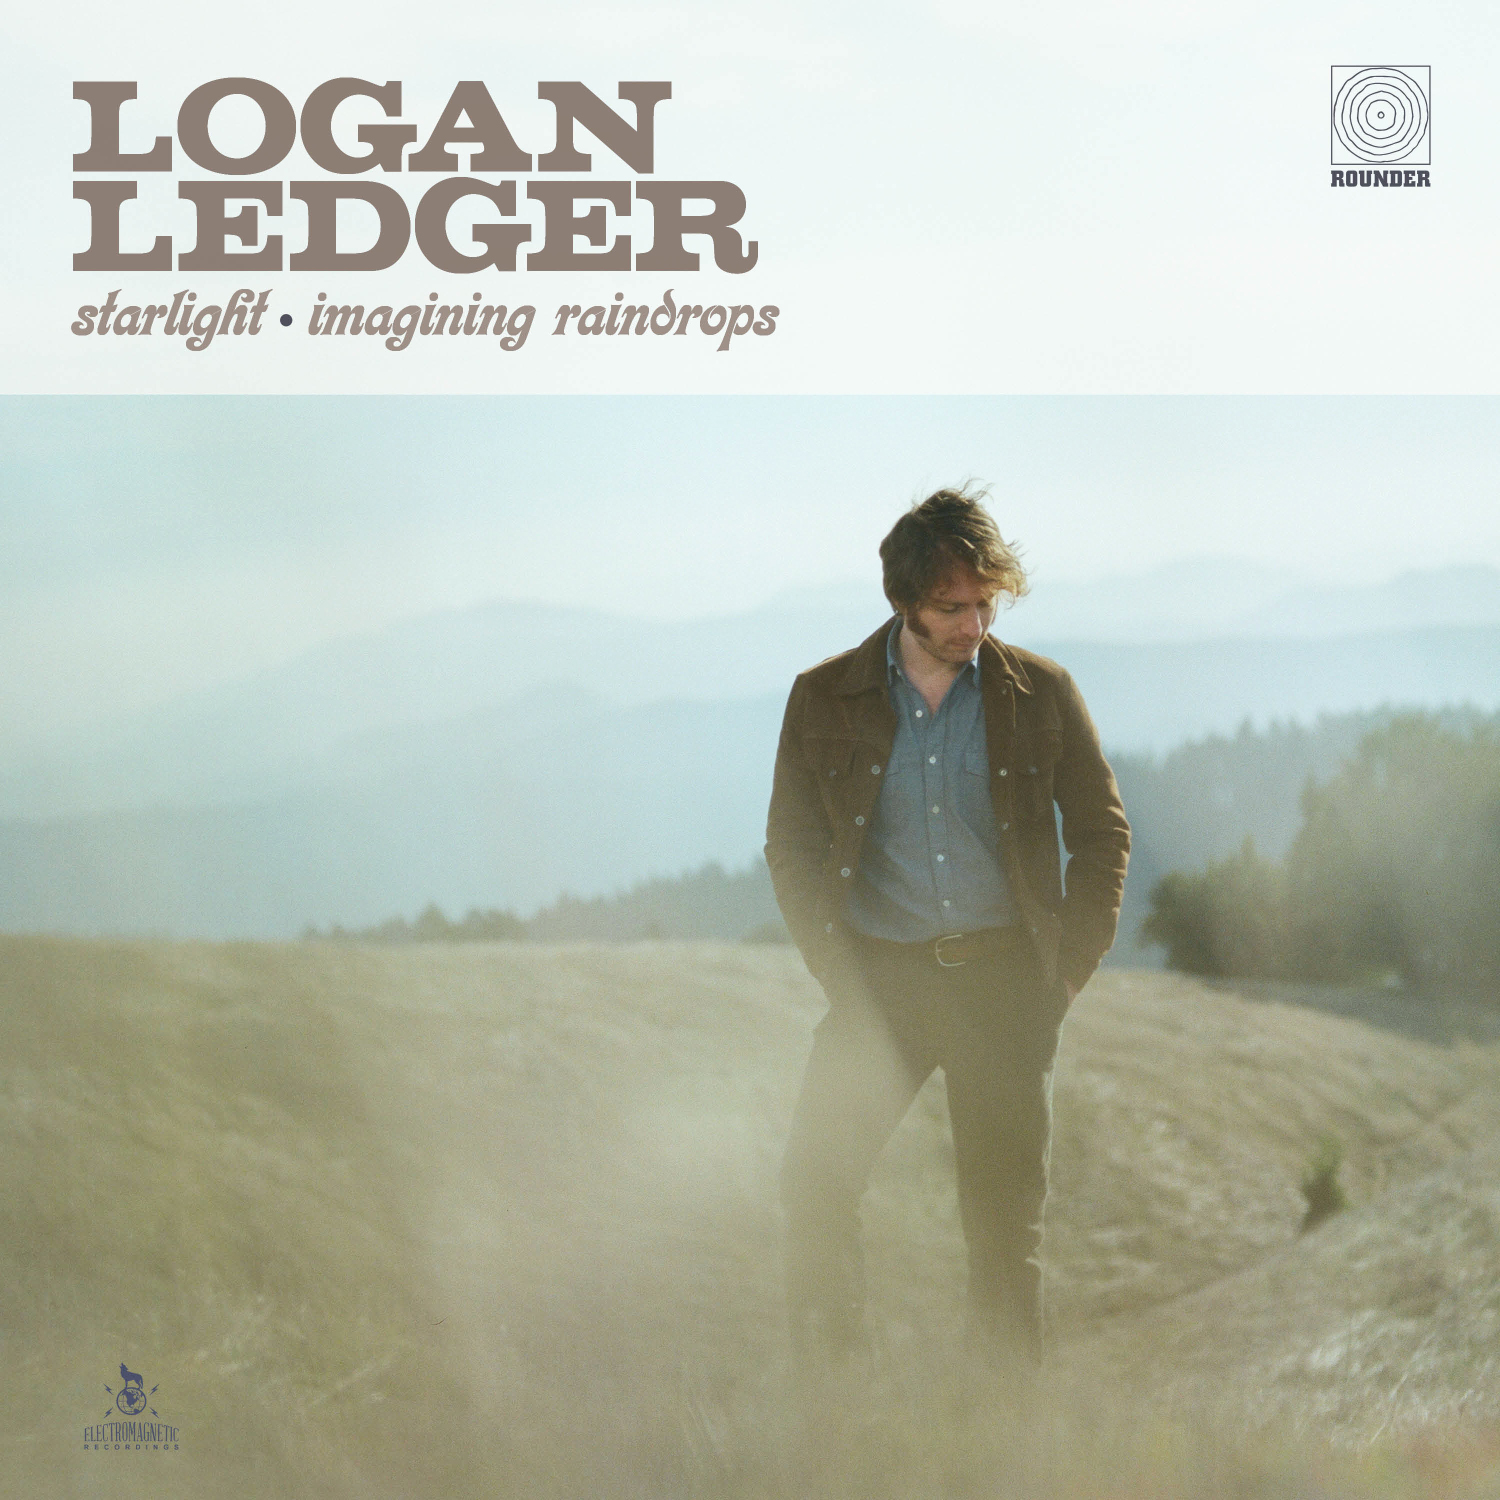 Logan Ledger "Starlight/Imagining Raindrops" 45 | 2019 Rounder Records | Produced by T Bone Burnett